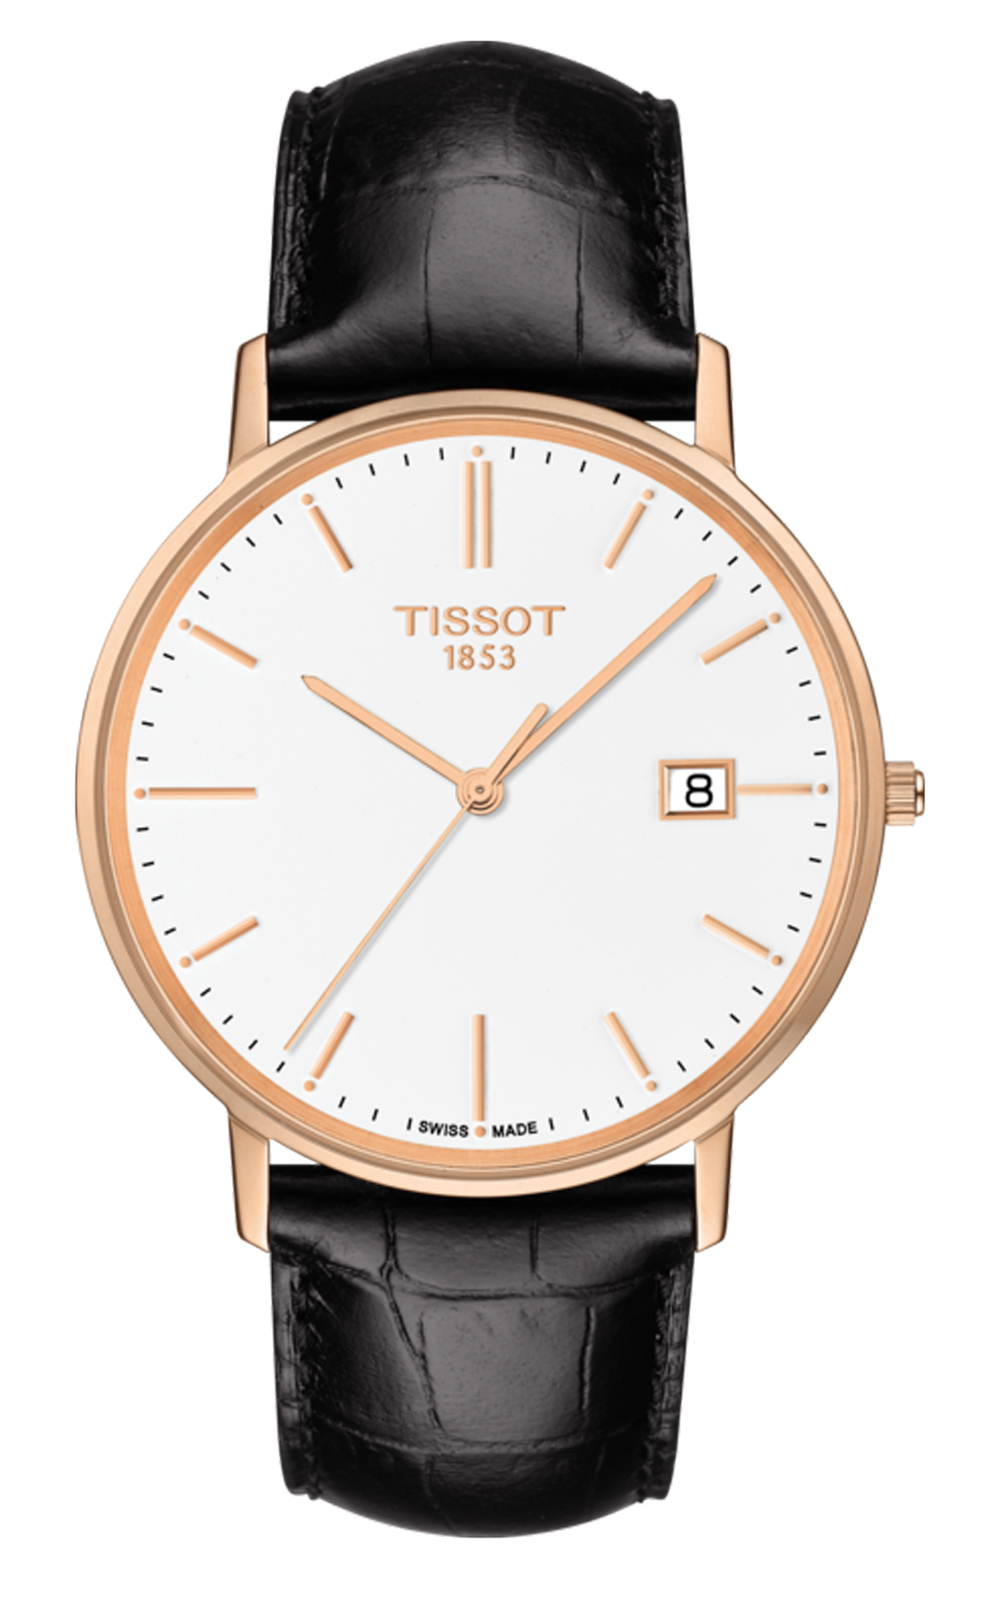 Đồng hồ nam Tissot T922.410.76.011.00